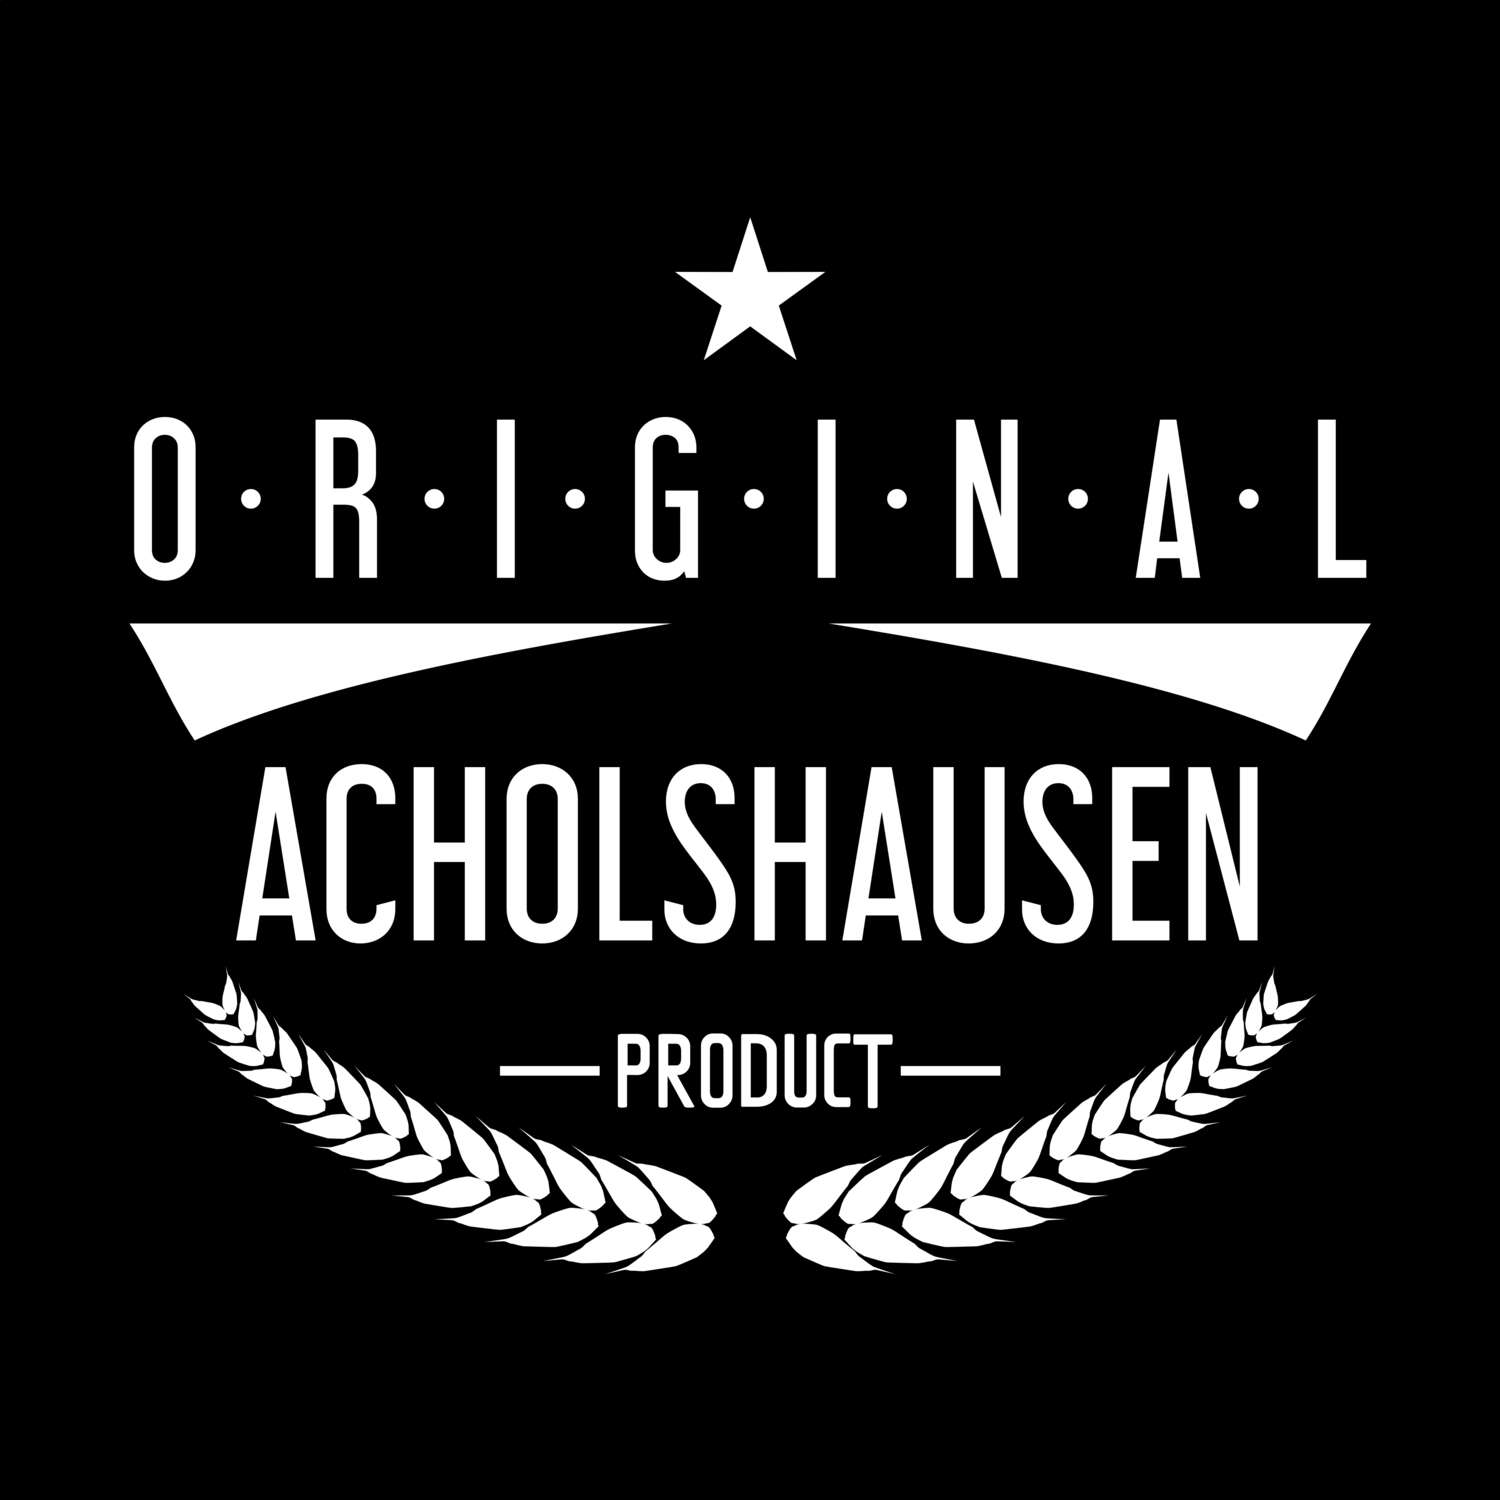 Acholshausen T-Shirt »Original Product«